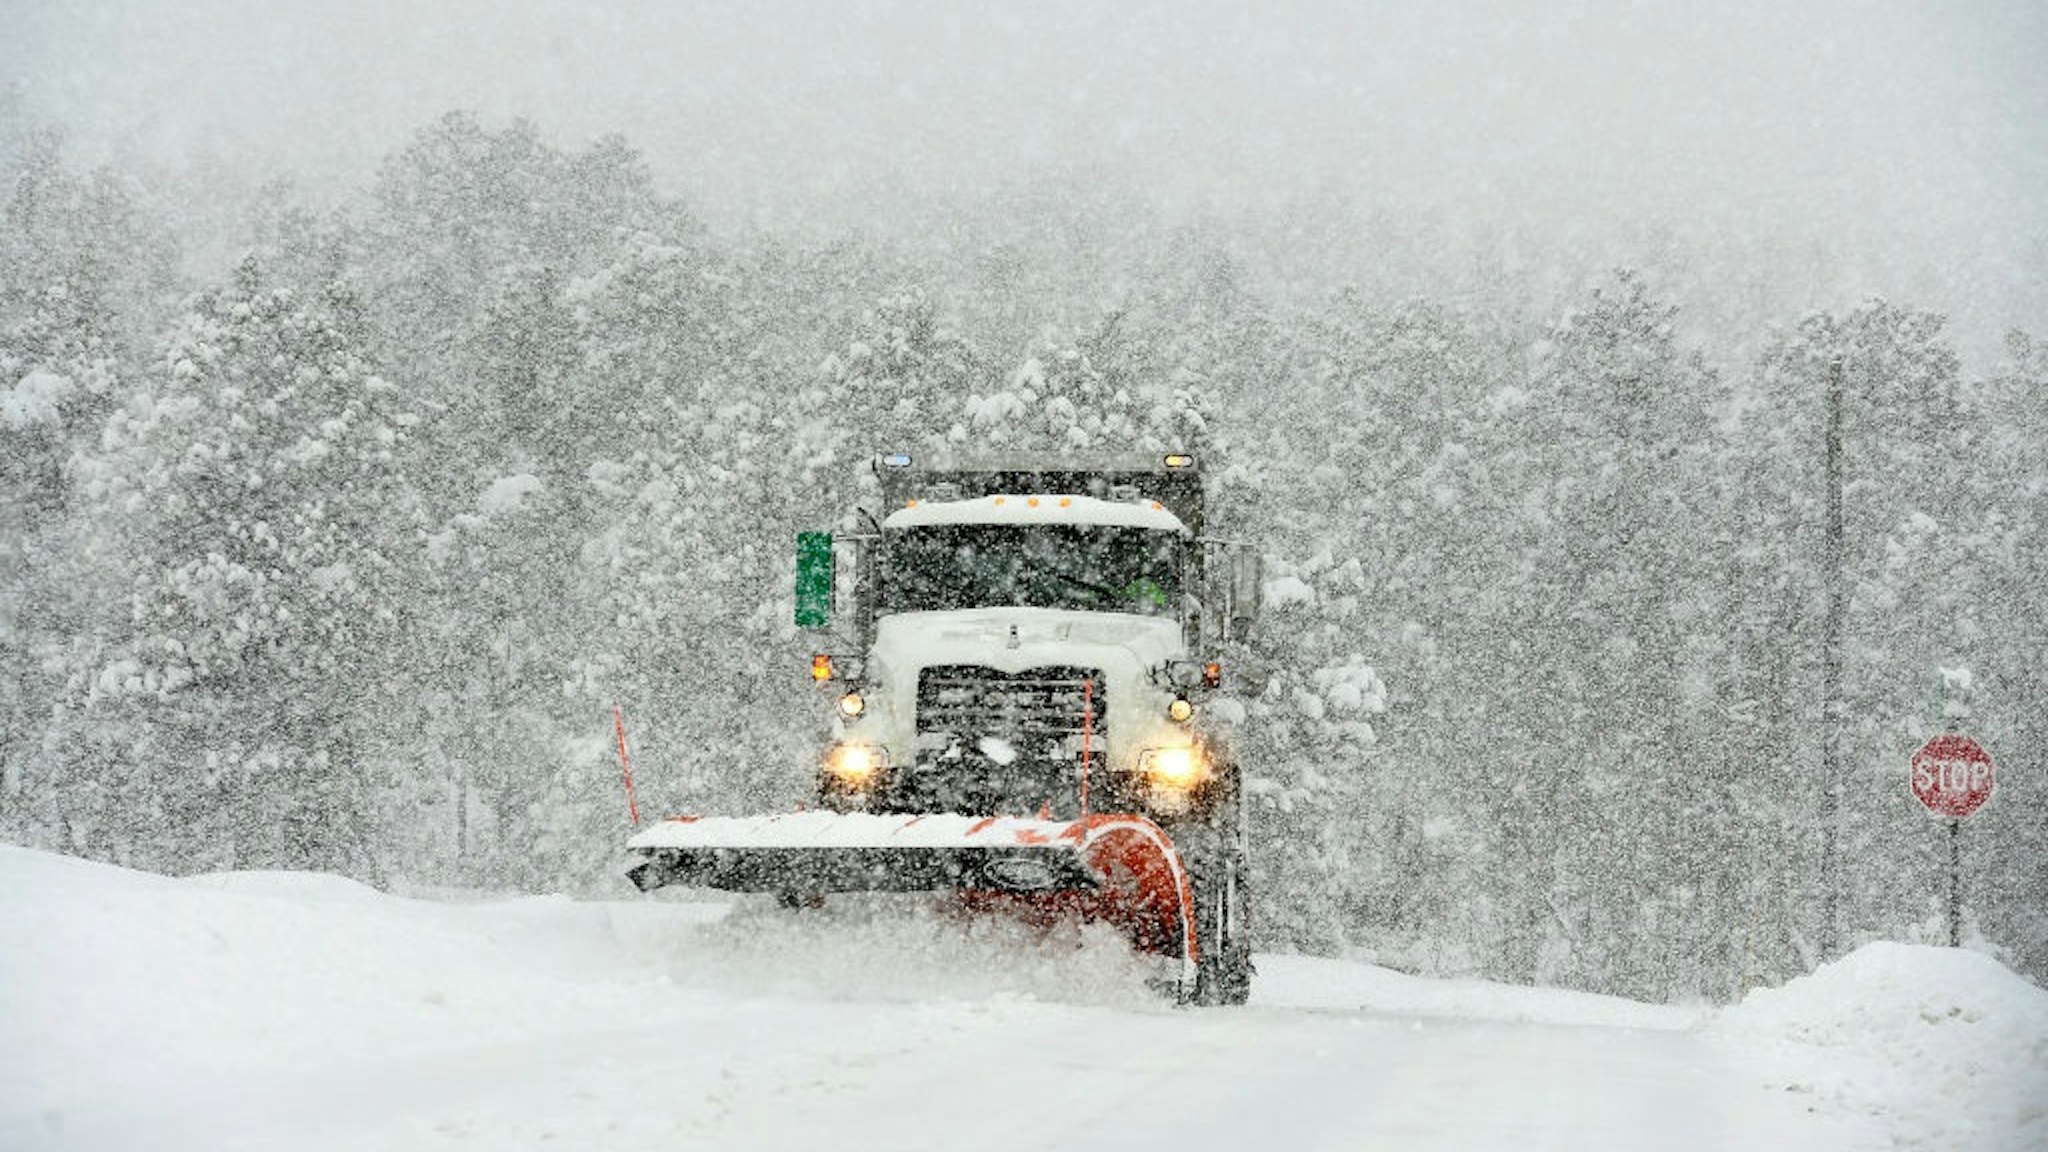 NEDERLAND, COLORADO - MARCH 14: A snowplow comes off of Highway 119 to plow Ridge Road on March 14, 2021 in Nederland, Colorado.